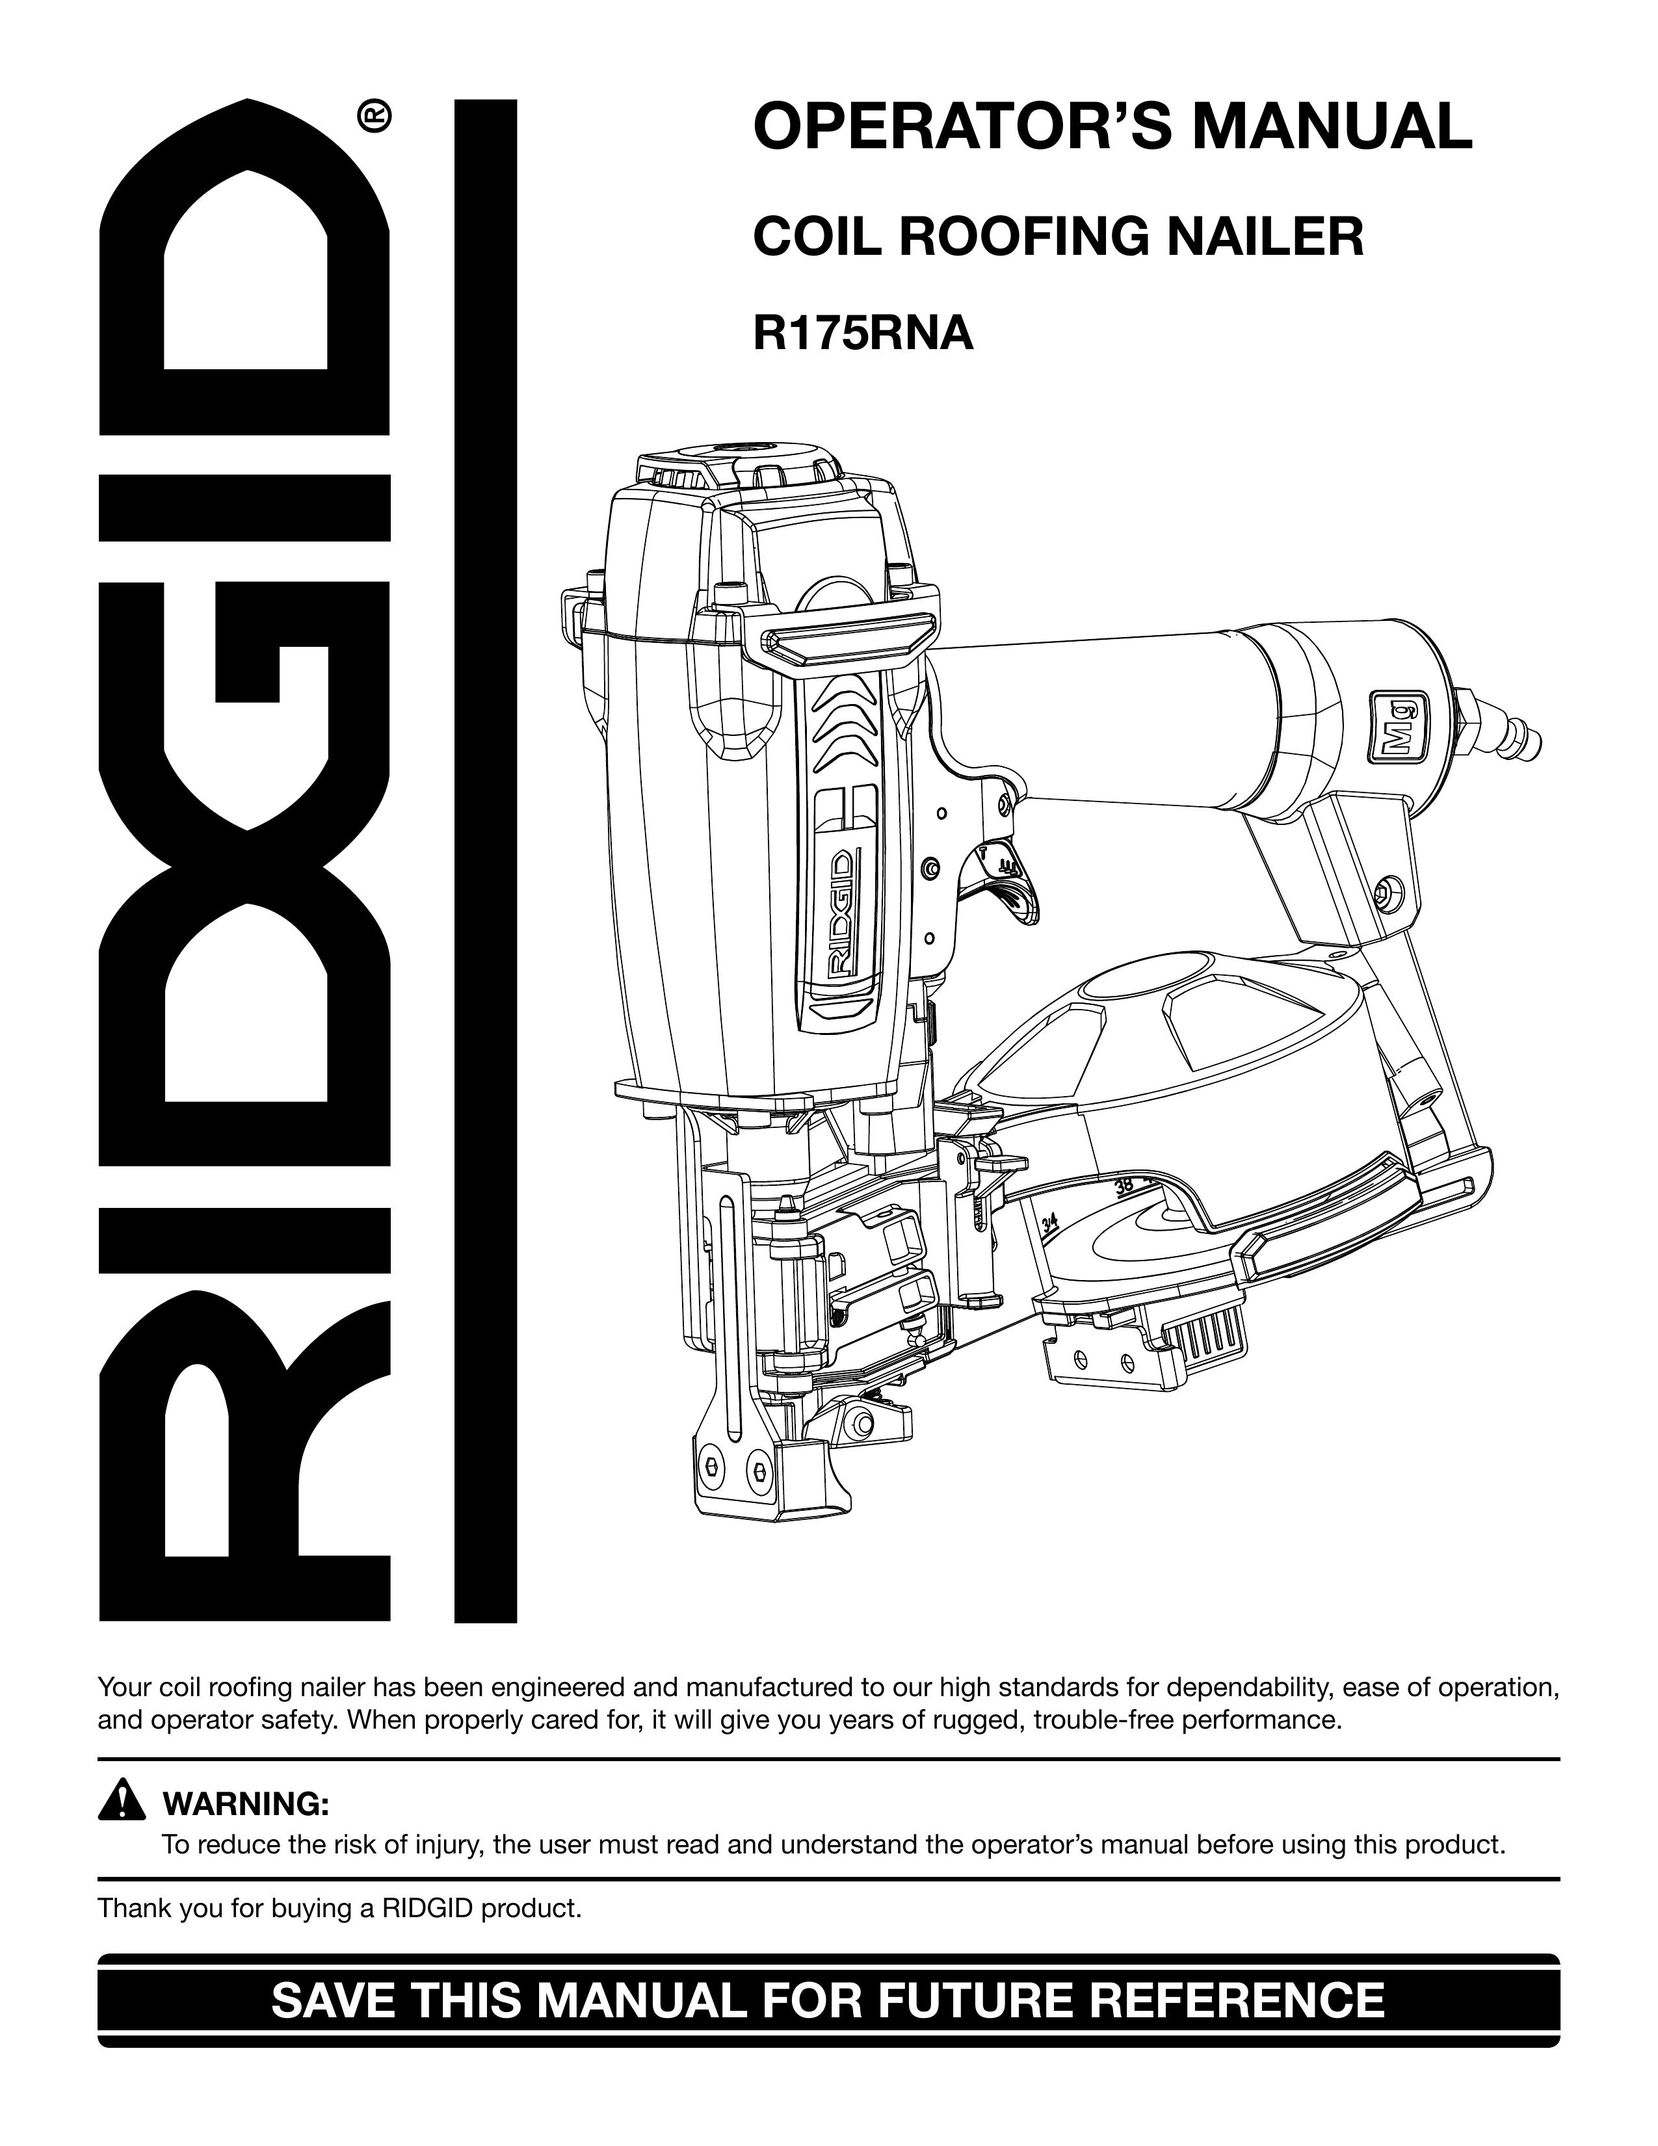 RIDGID R175RNA Nail Gun User Manual